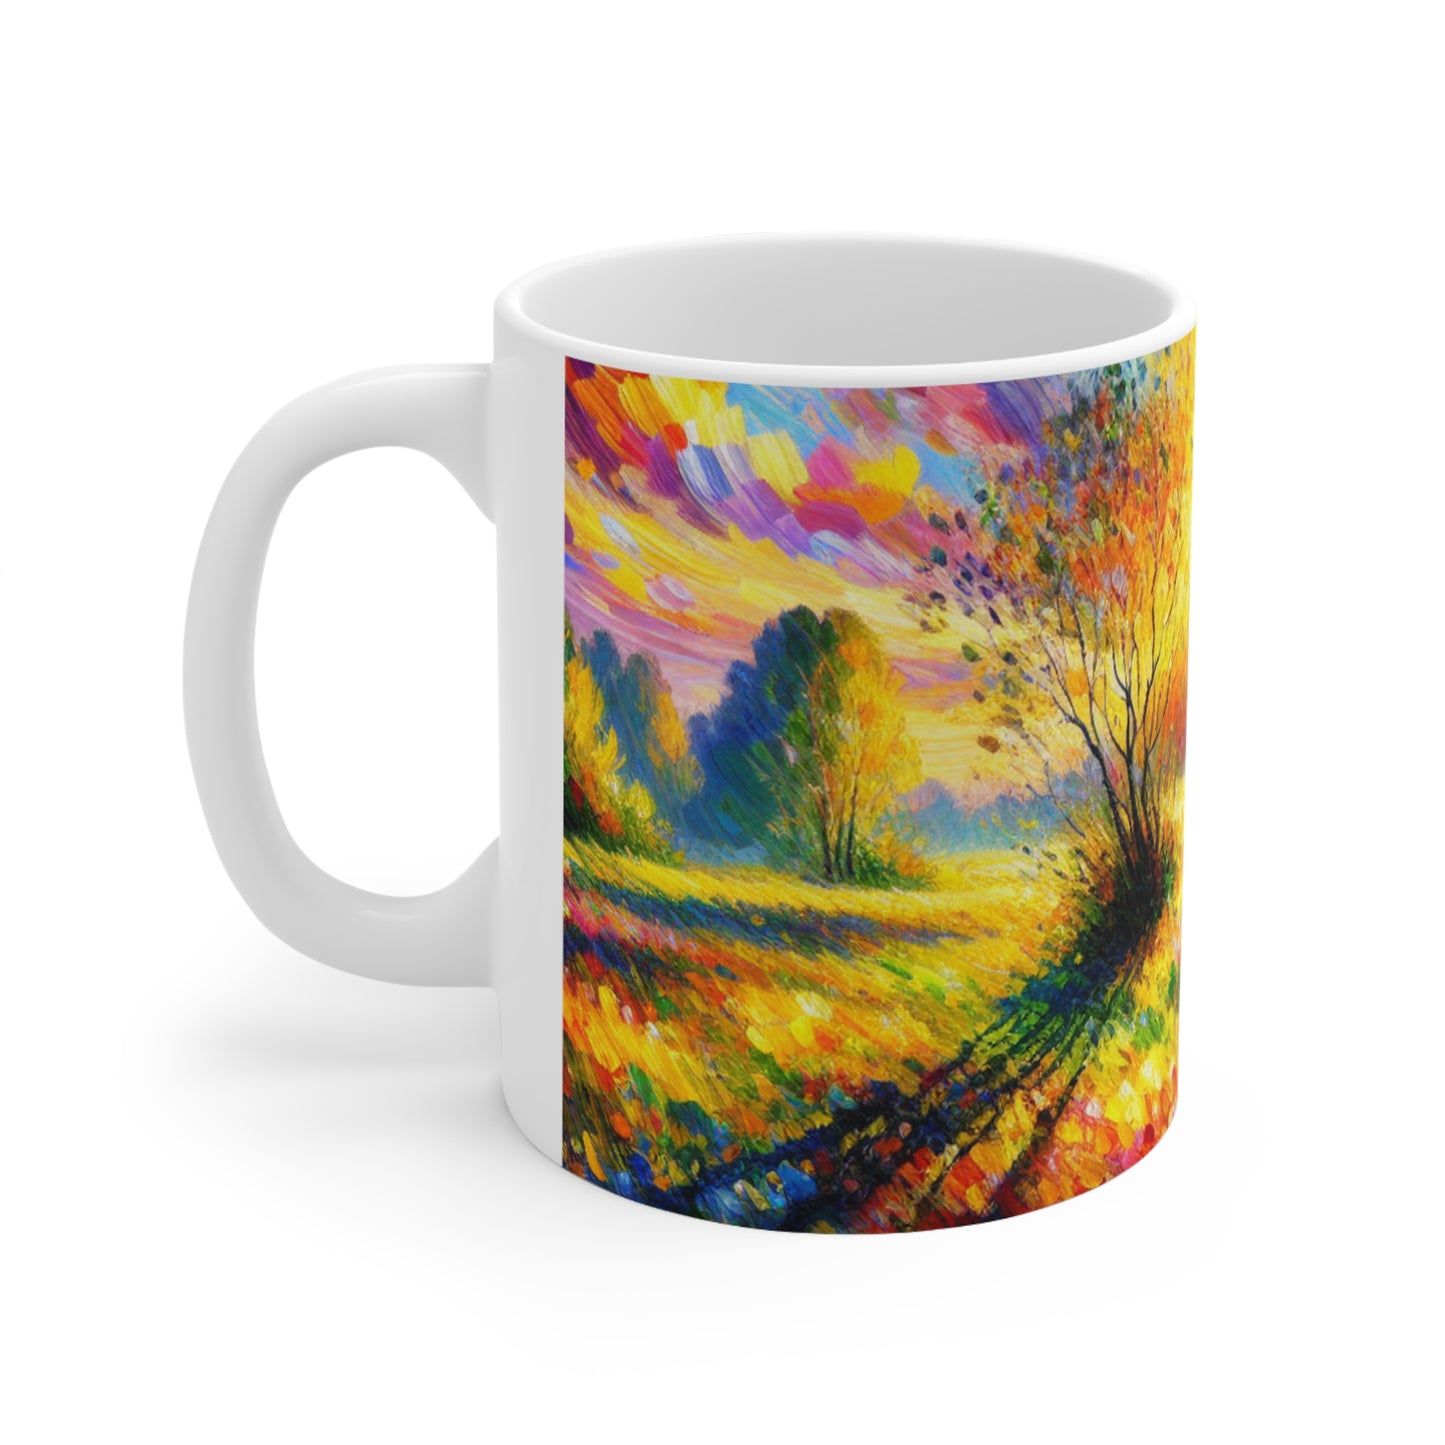 "Vibrant Springtime Sky" - The Alien Ceramic Mug 11oz Fauvism Style